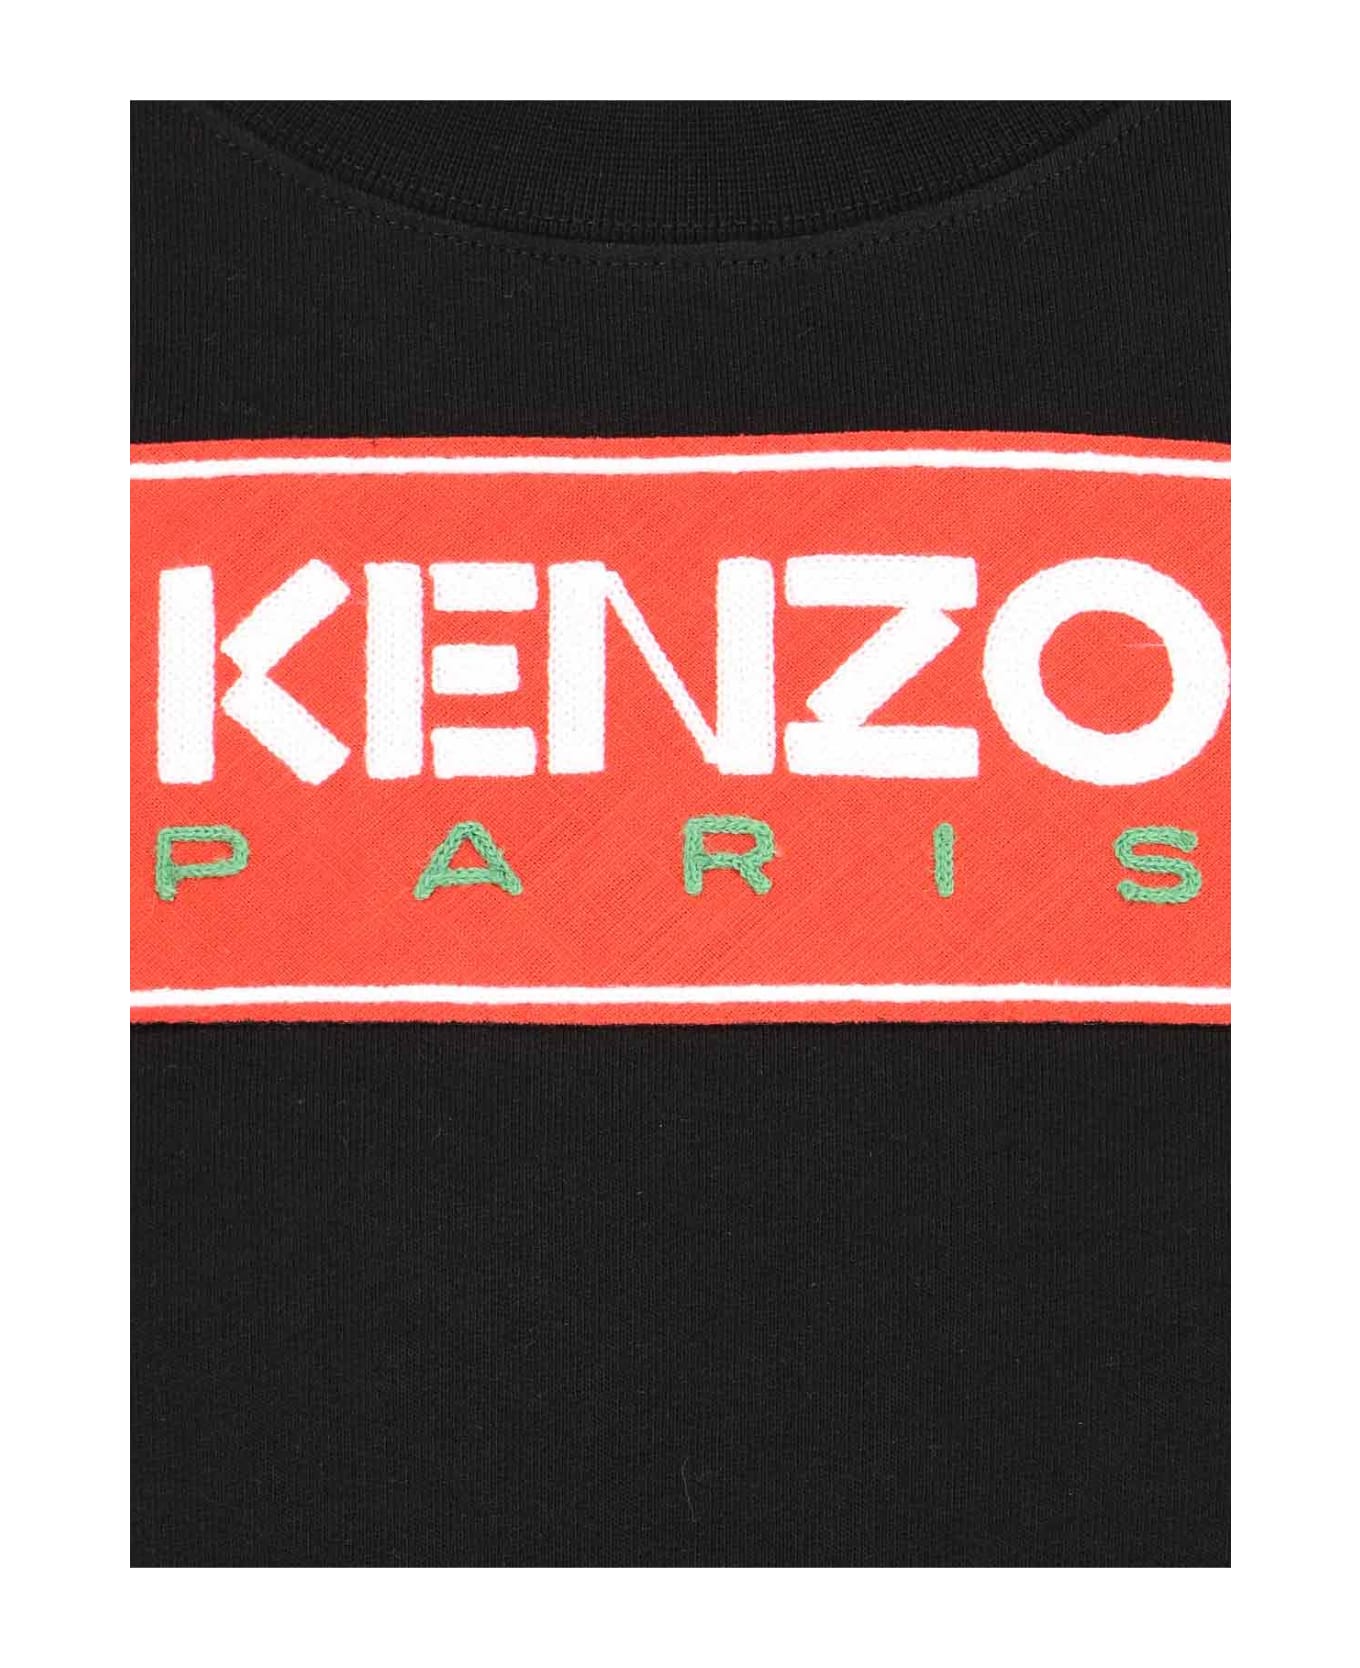 Kenzo Paris Sweatshirt - Black